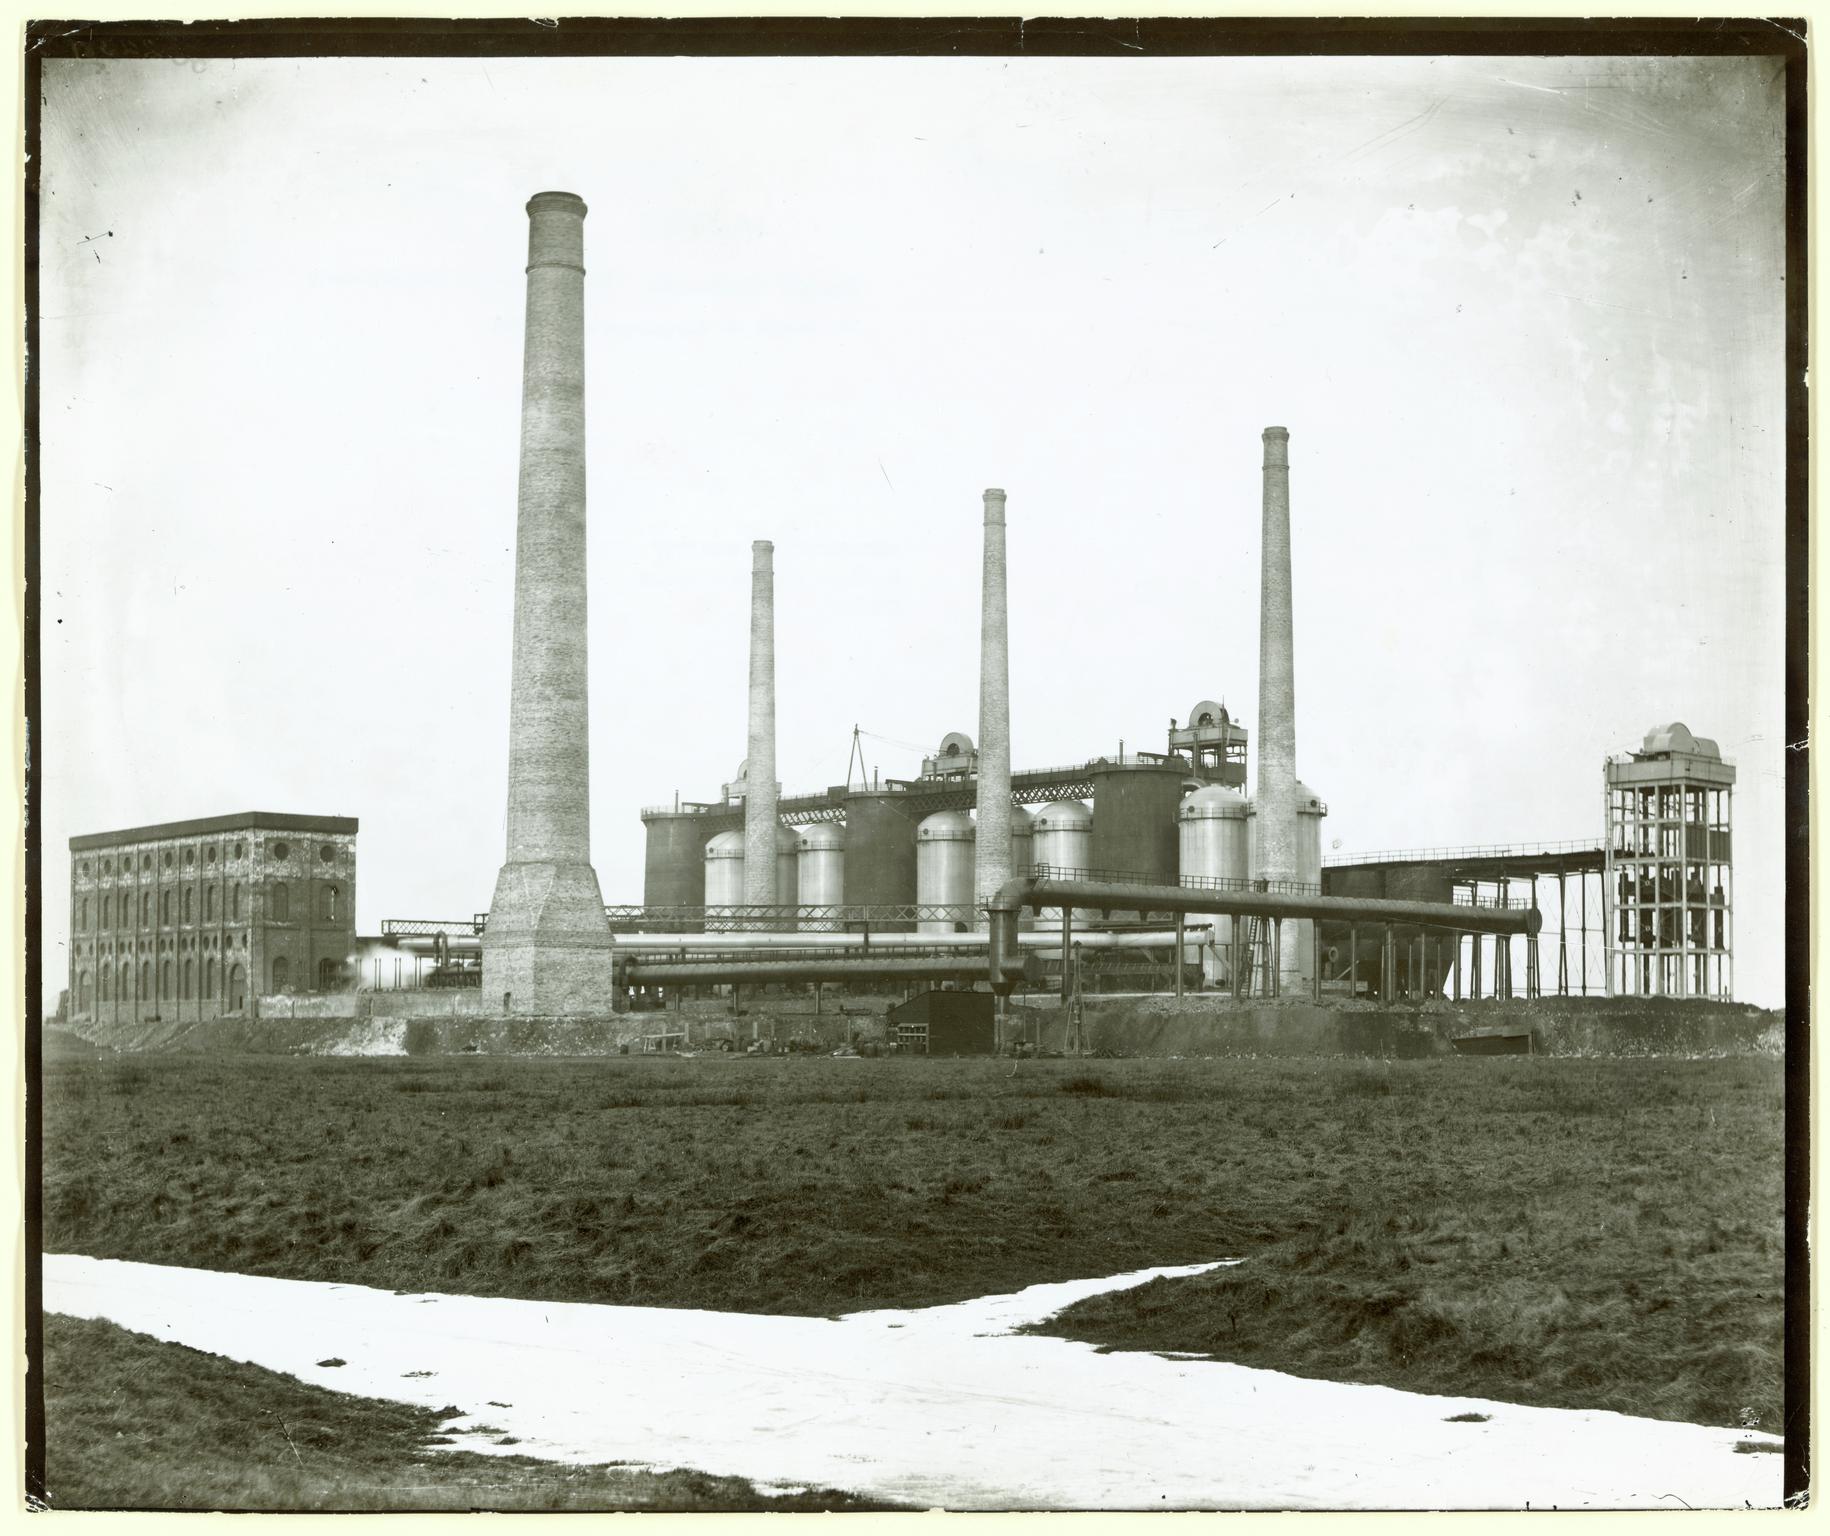 East Moors iron & steelworks, Cardiff, photograph